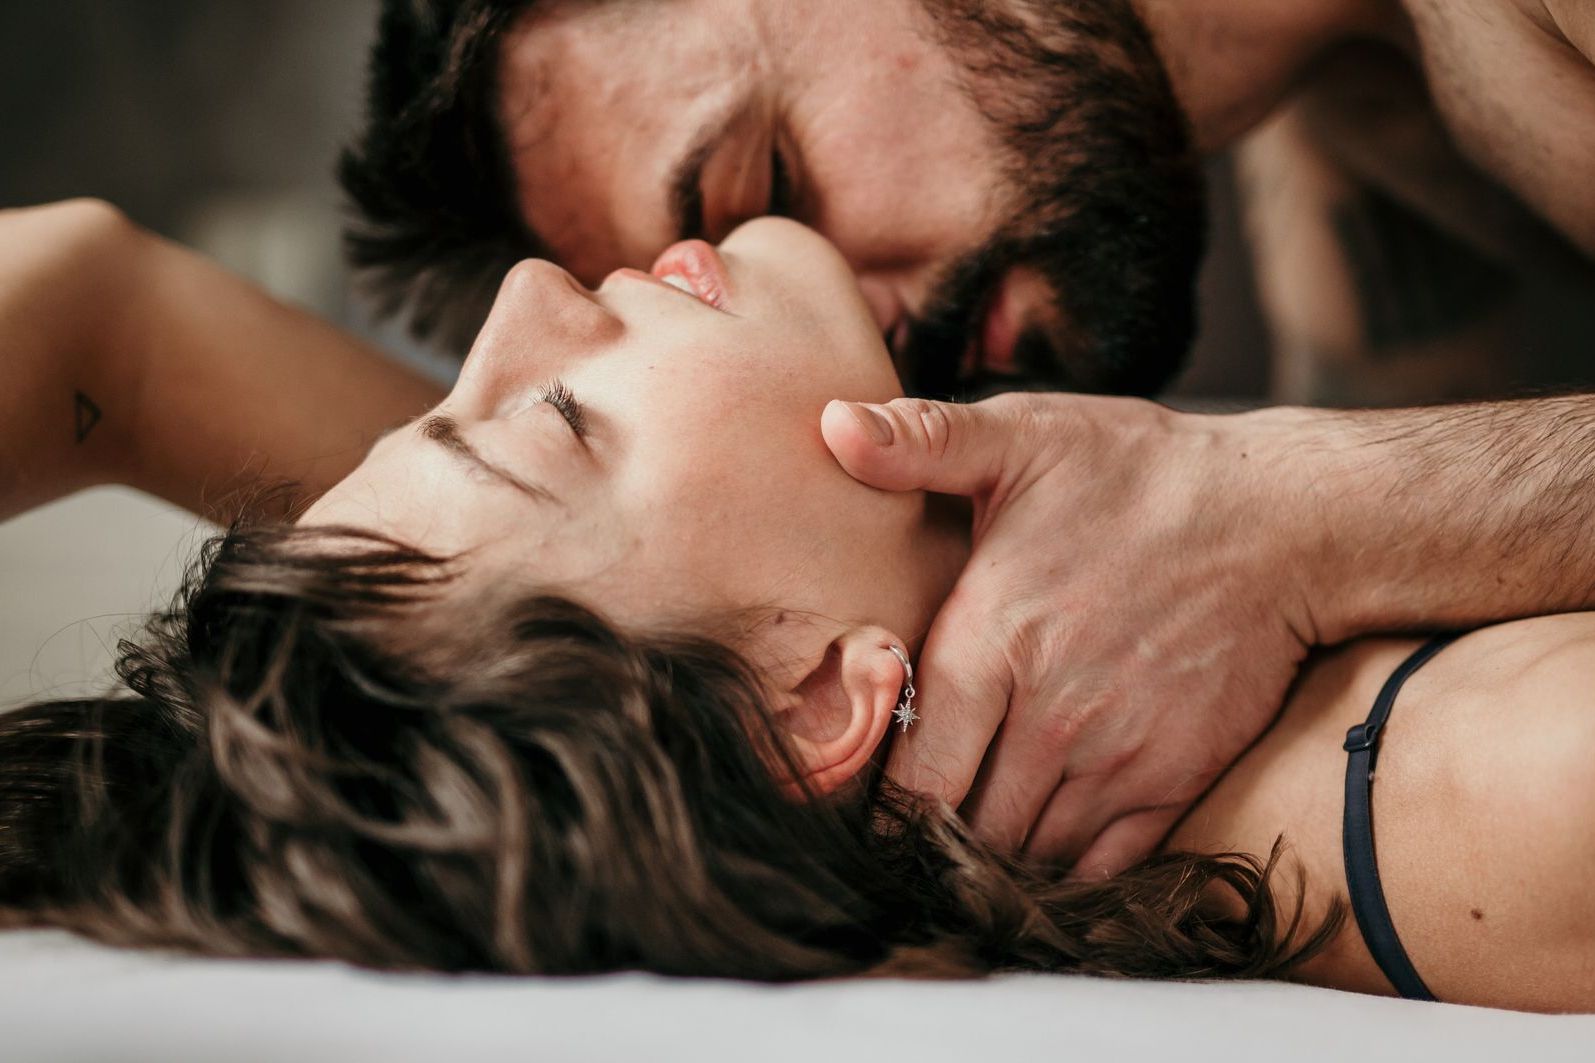 Ways to increase pleasure during sex